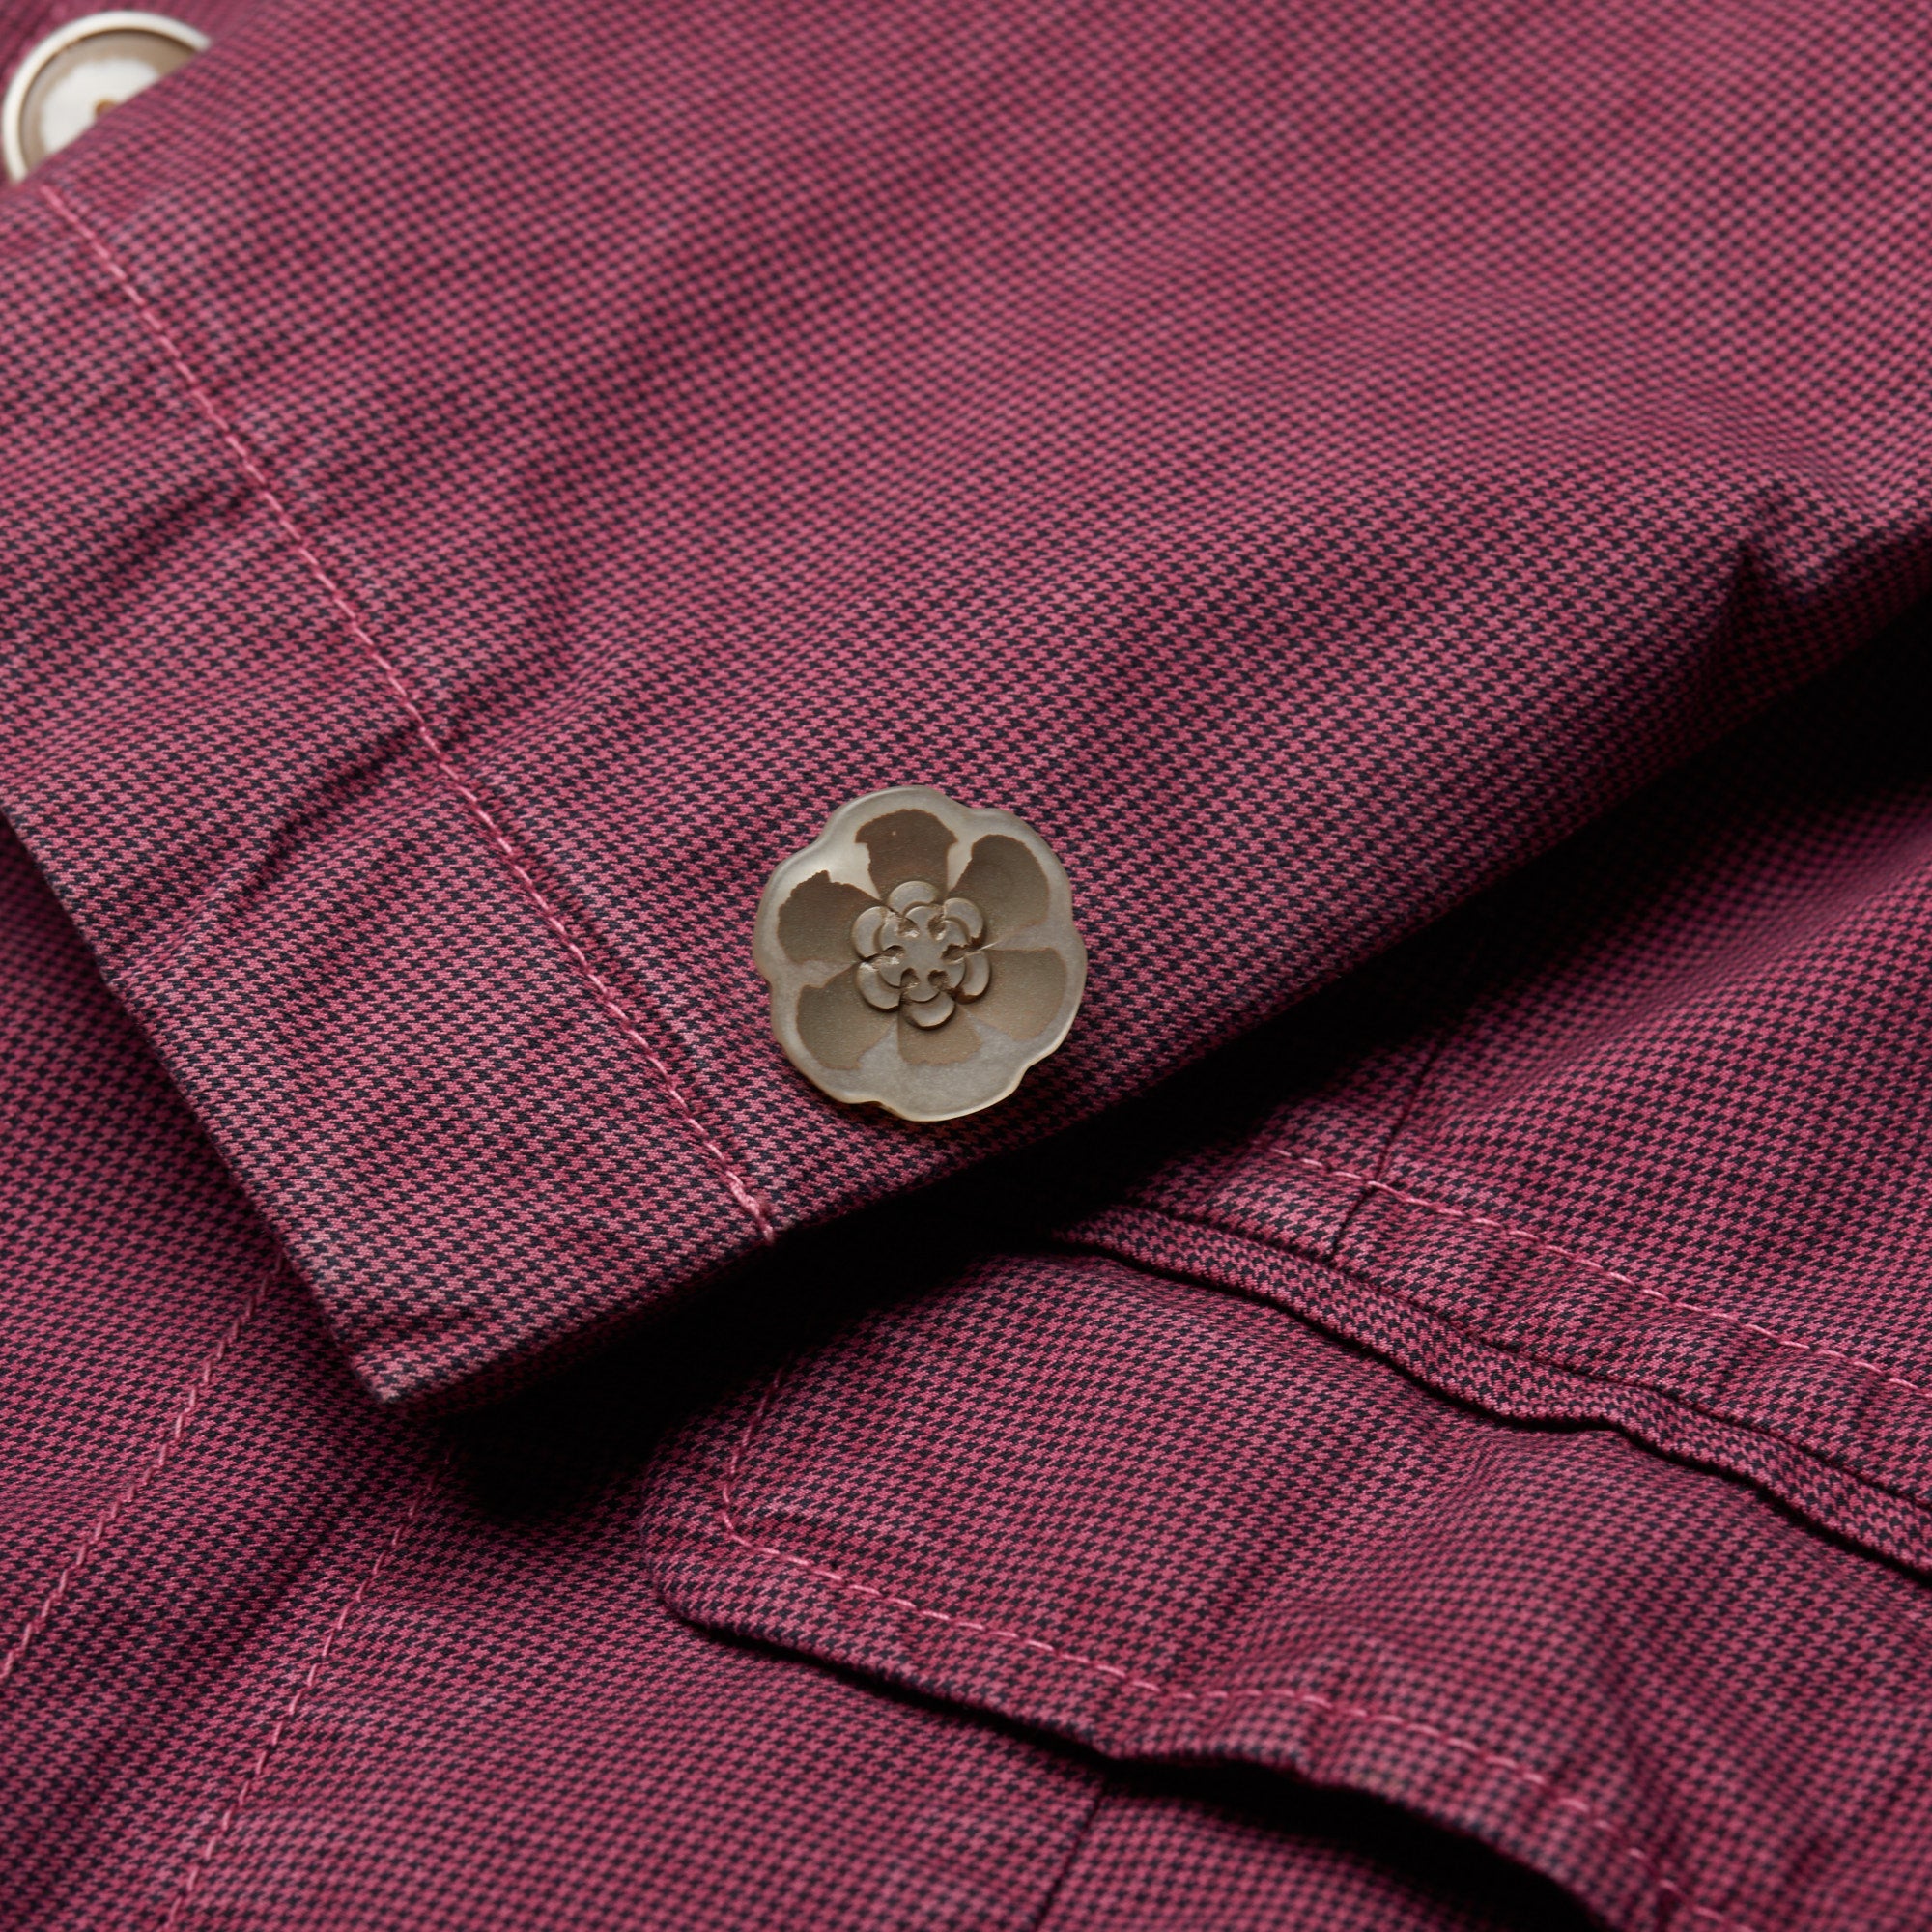 BOGLIOLI Milano "Vivy" Dark Pink Houndstooth Cotton Women Jacket EU 42 NEW US S WOMEN'S BOUTIQUE